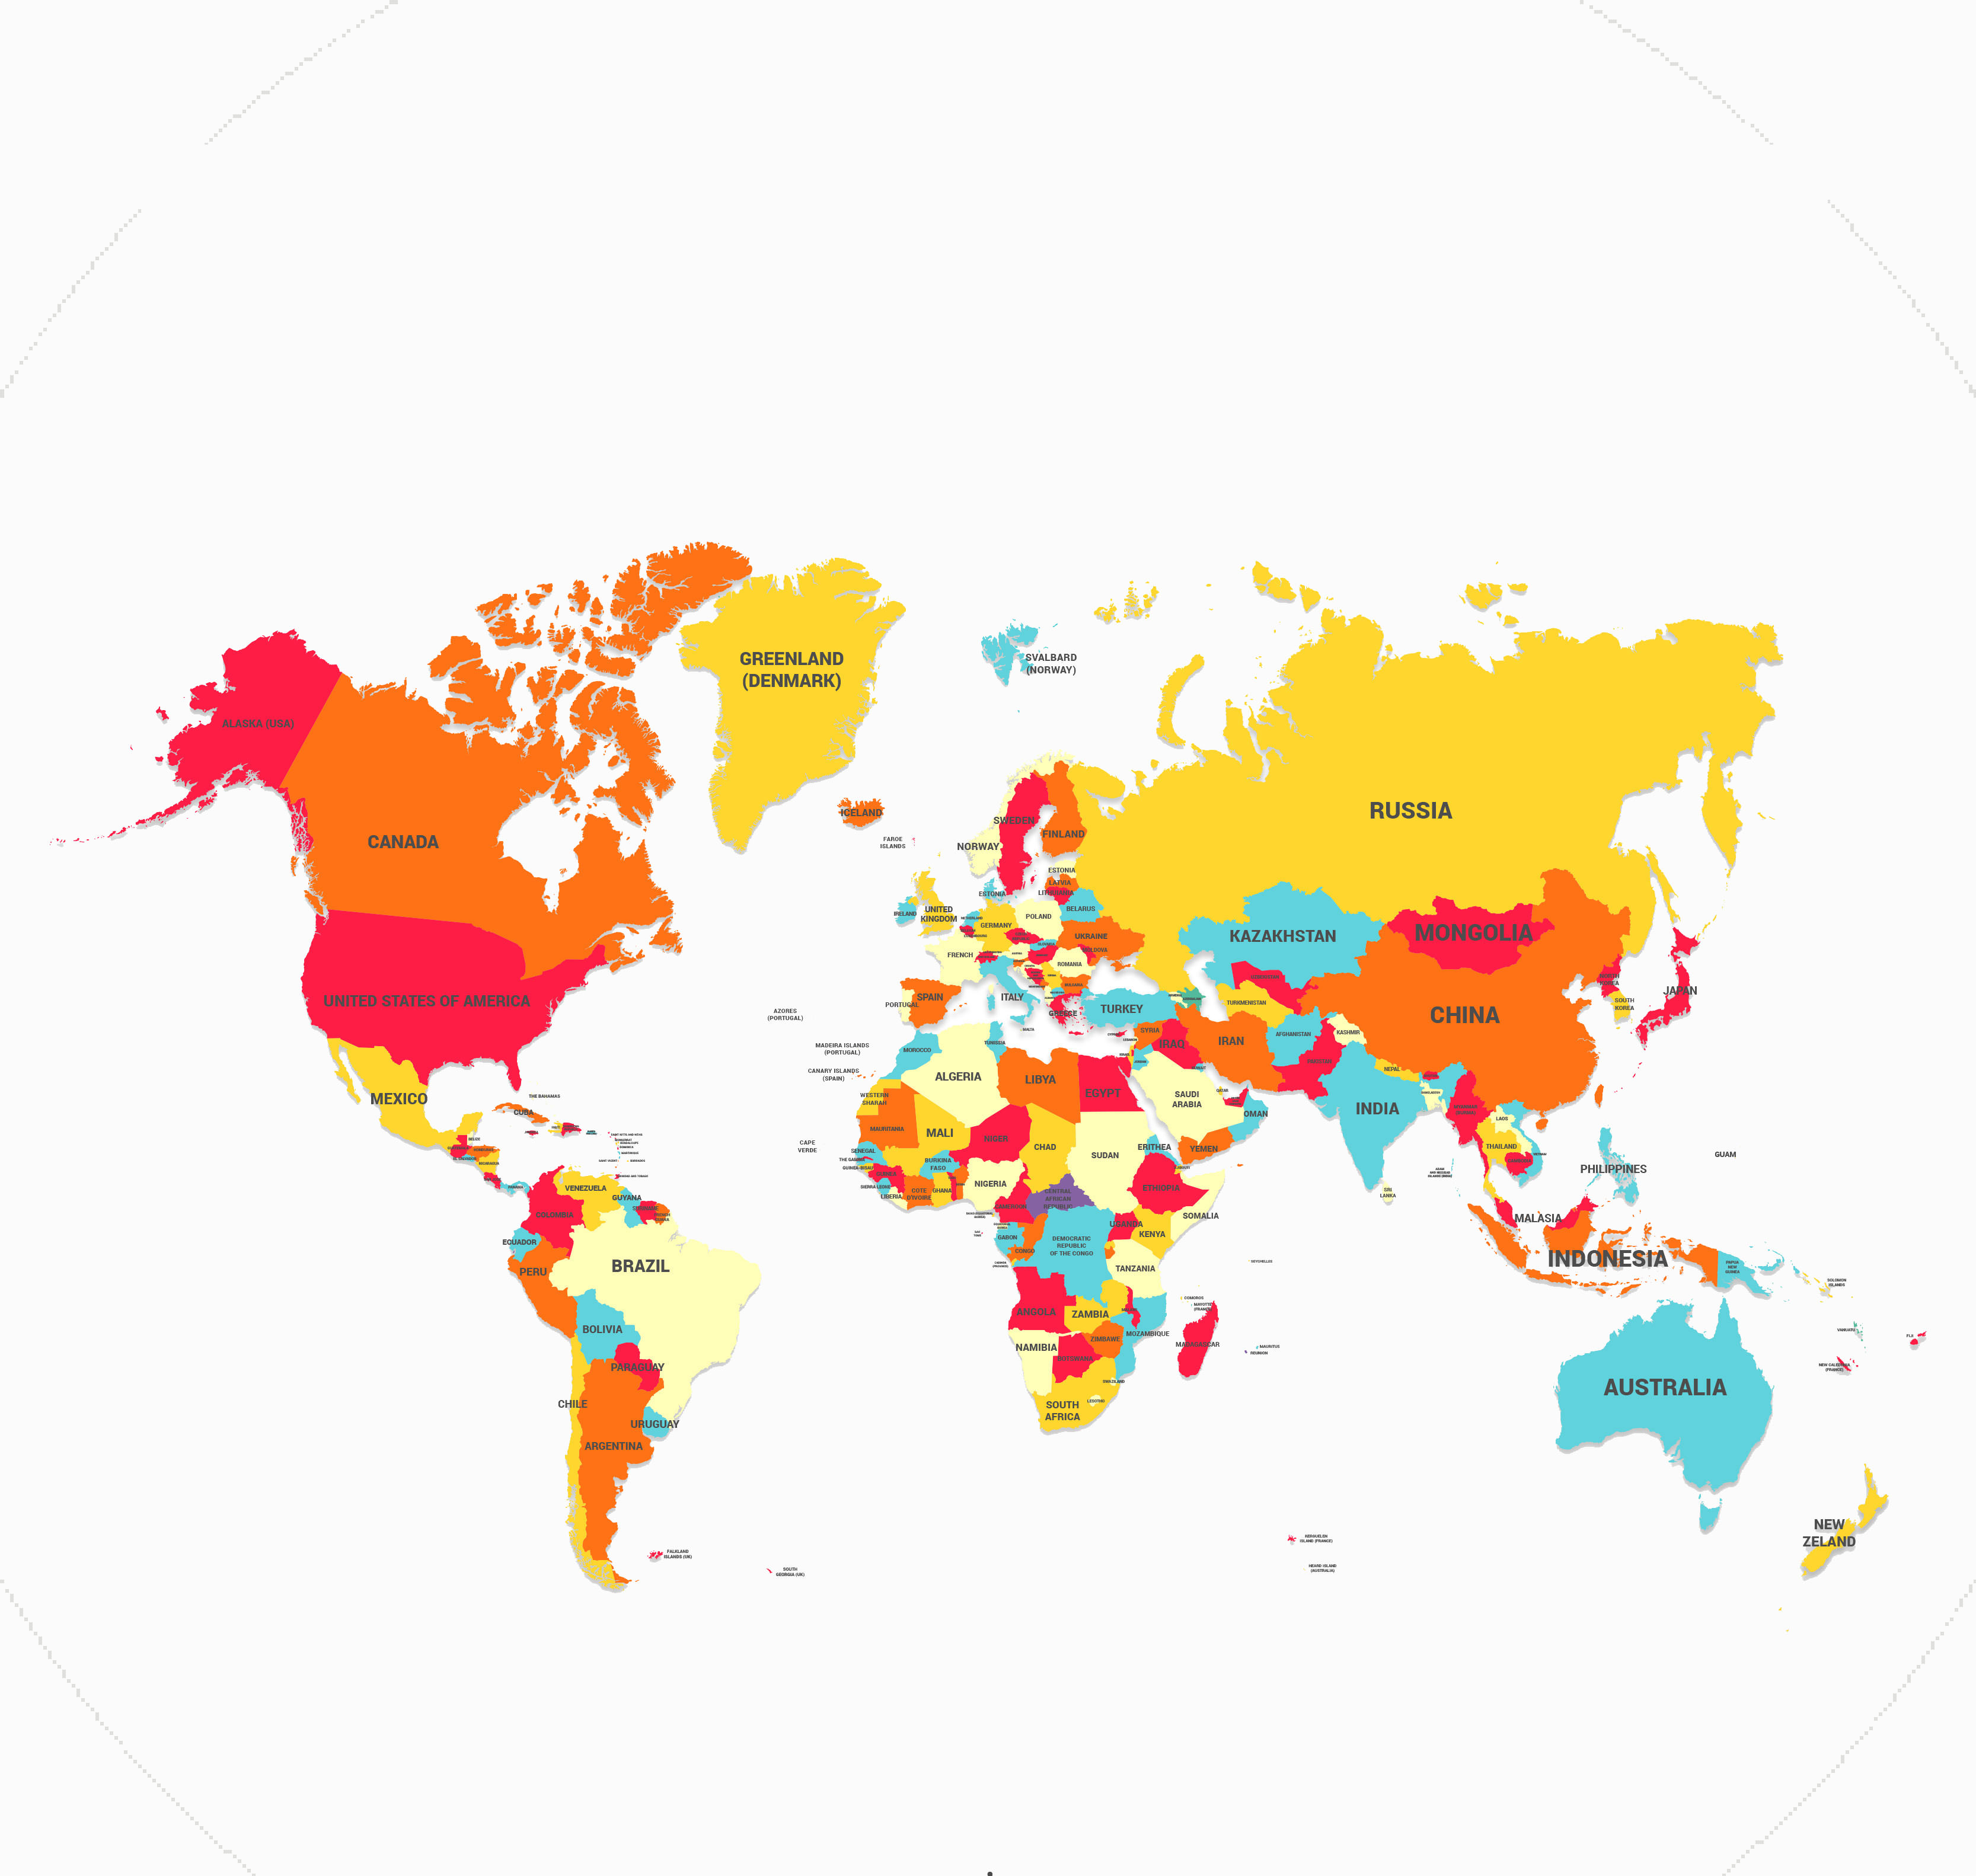 29+ Free World Map Vectors, AI, EPS, SVG Download | Design Trends